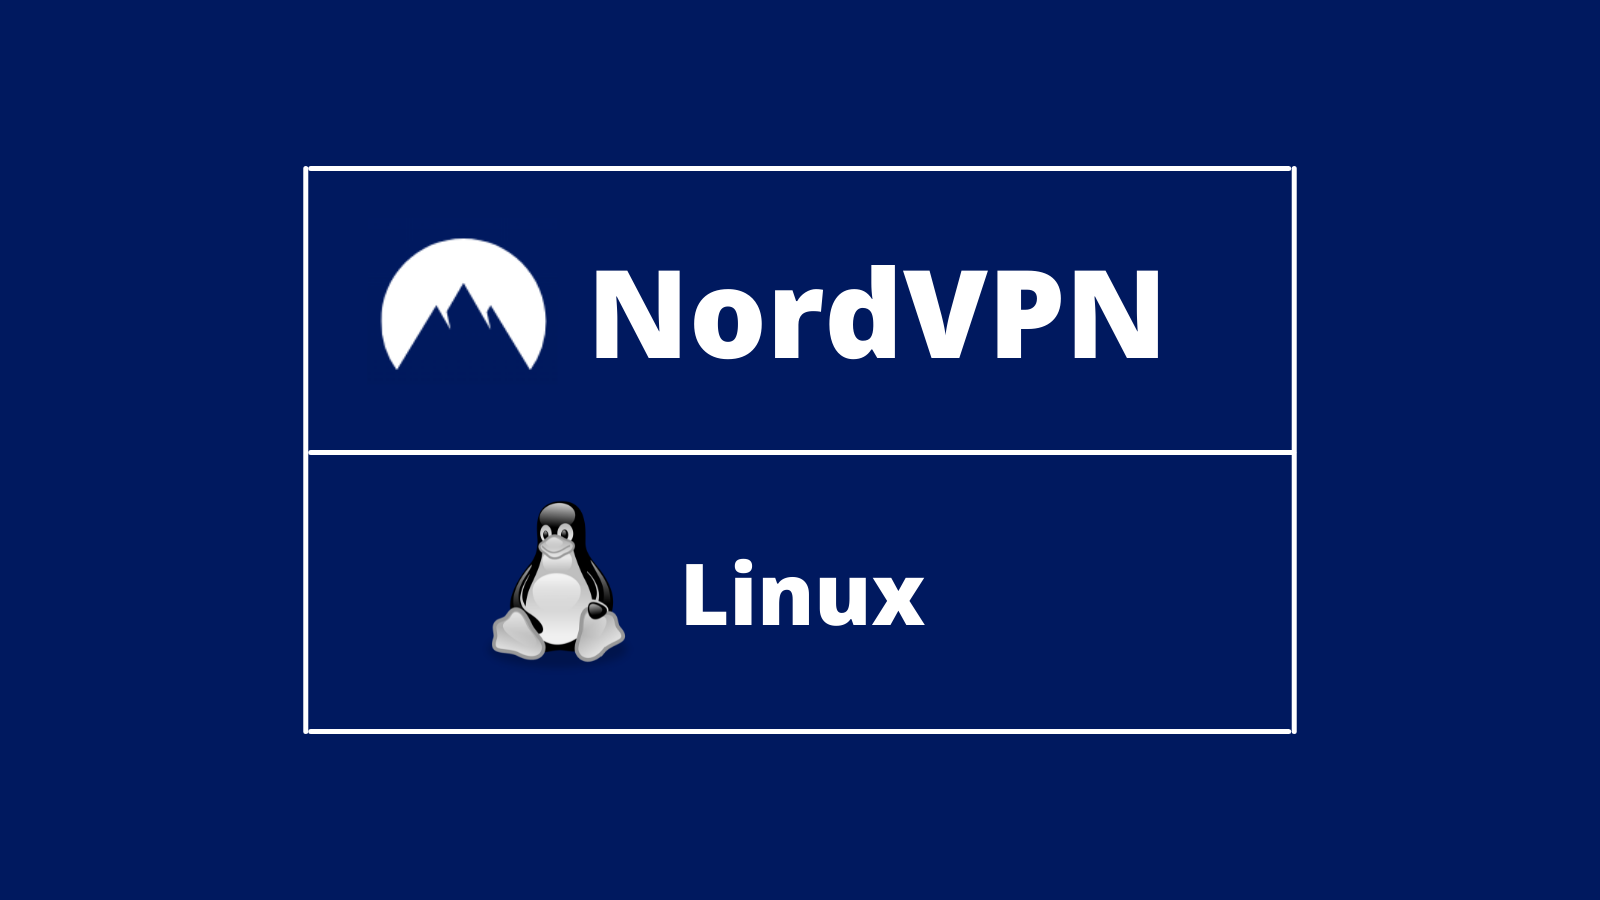 nordvpn download ubuntu